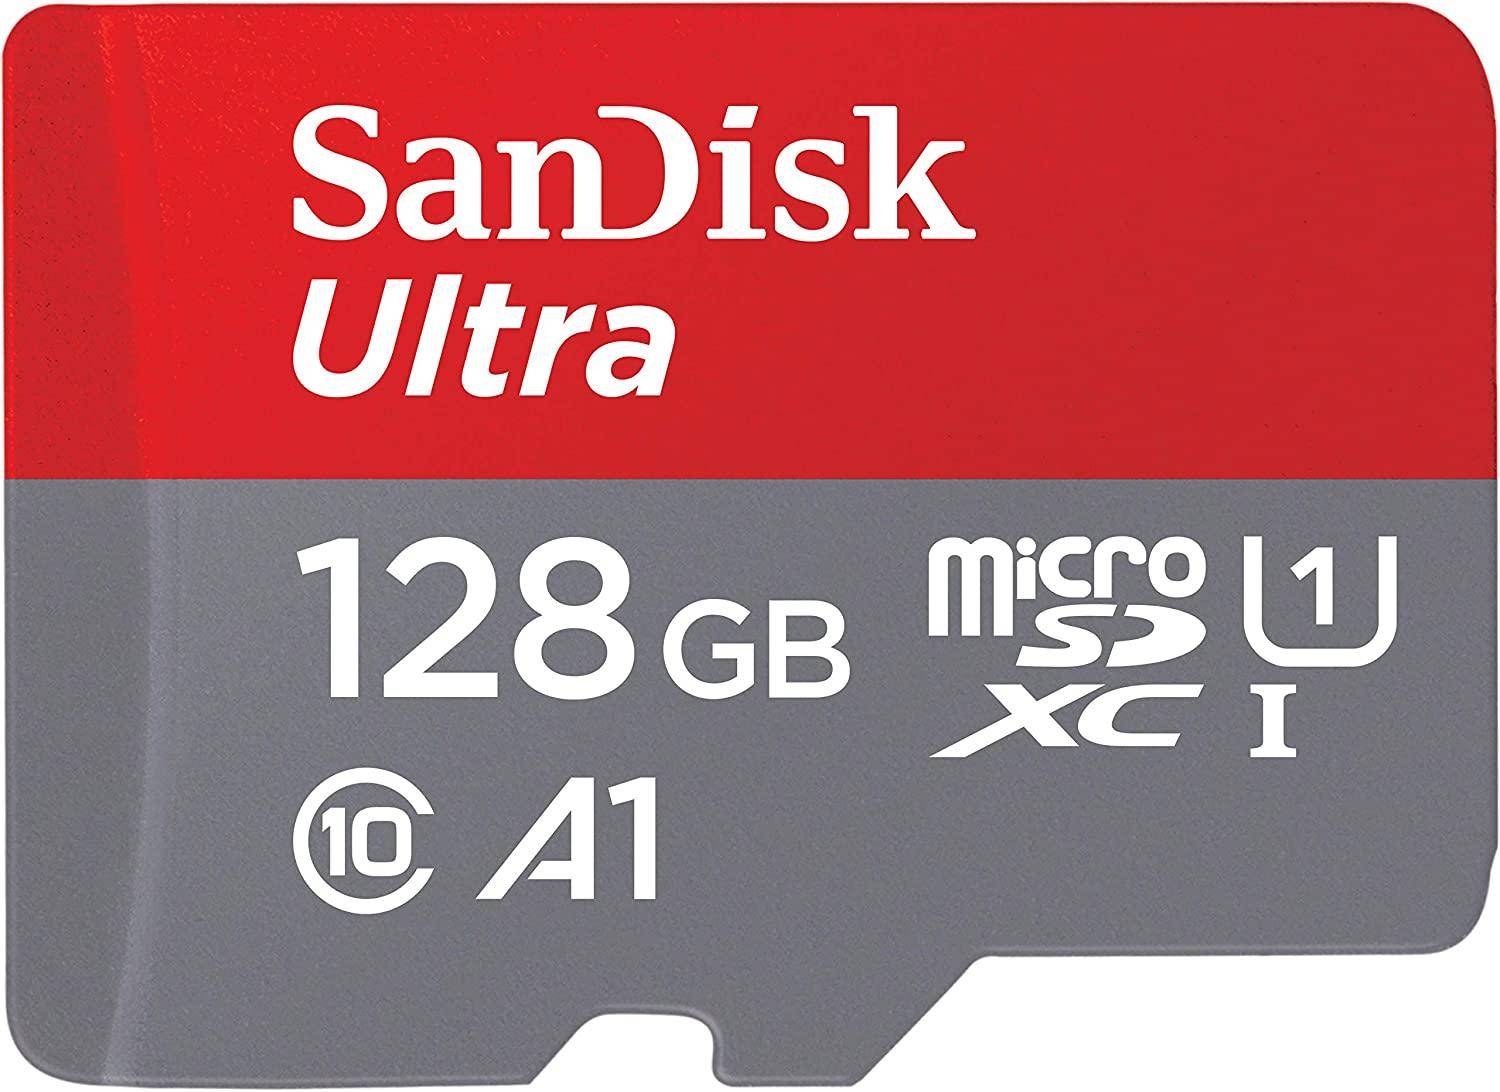 Sandisk Ultra microSD UHS-I 128GB Memory Card (SDSQUA4-128G-GN6MN) zoom image